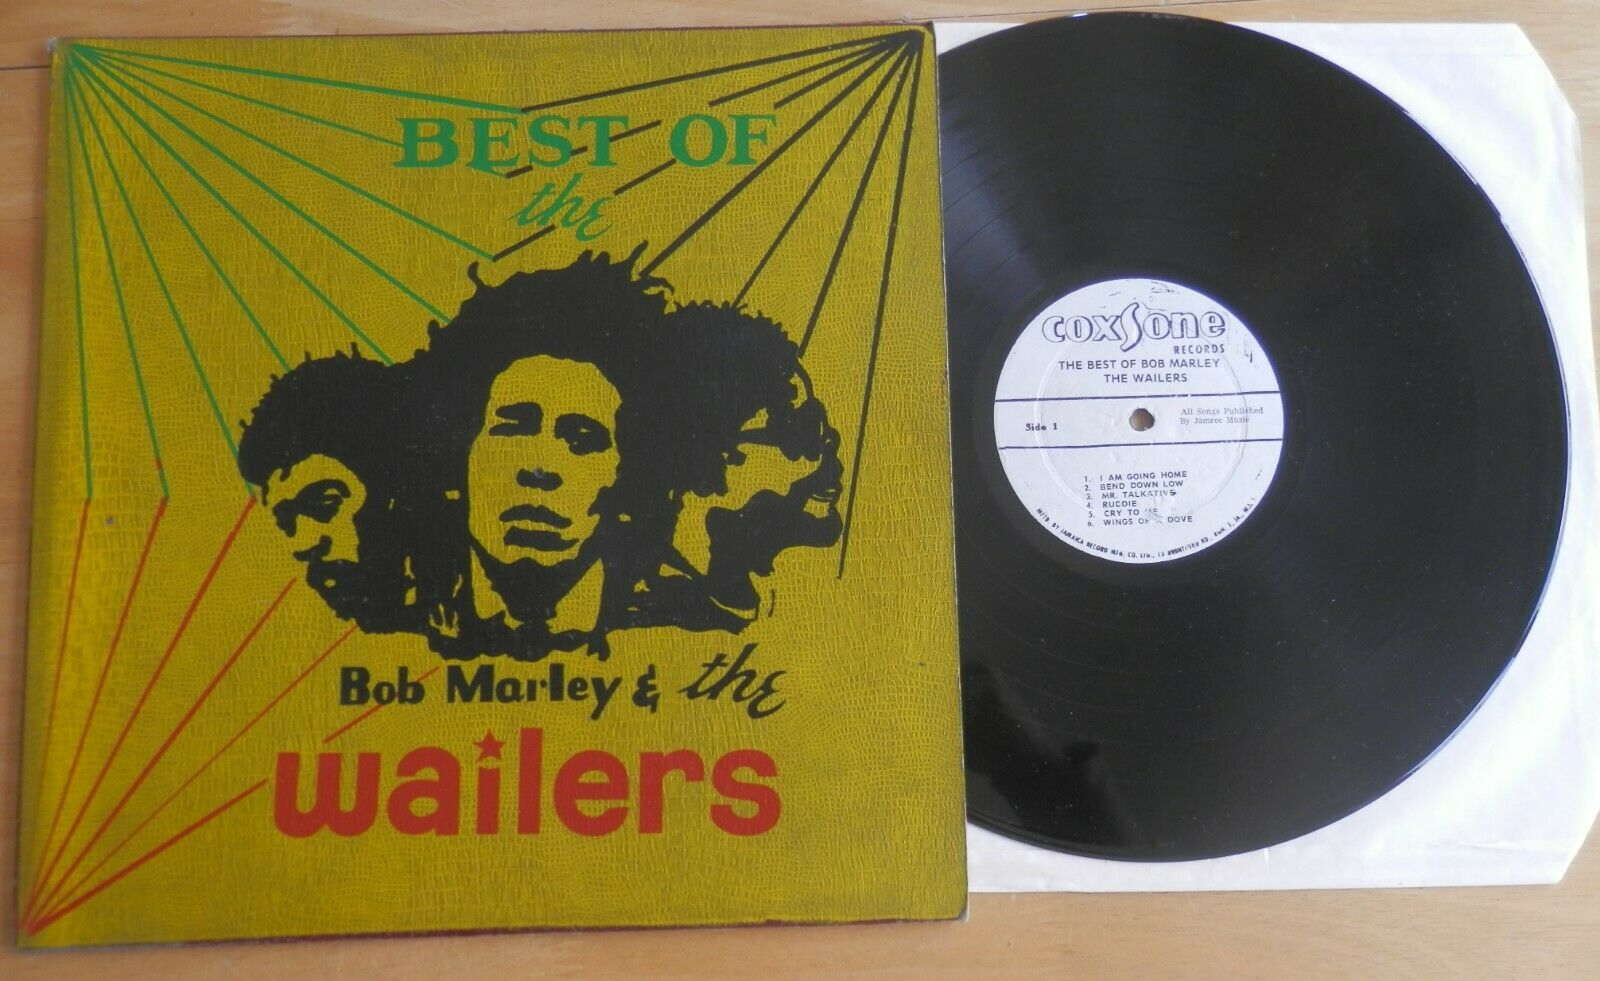 Bob Marley & The Wailers: Best of on Coxsone, Rare Silk Screen